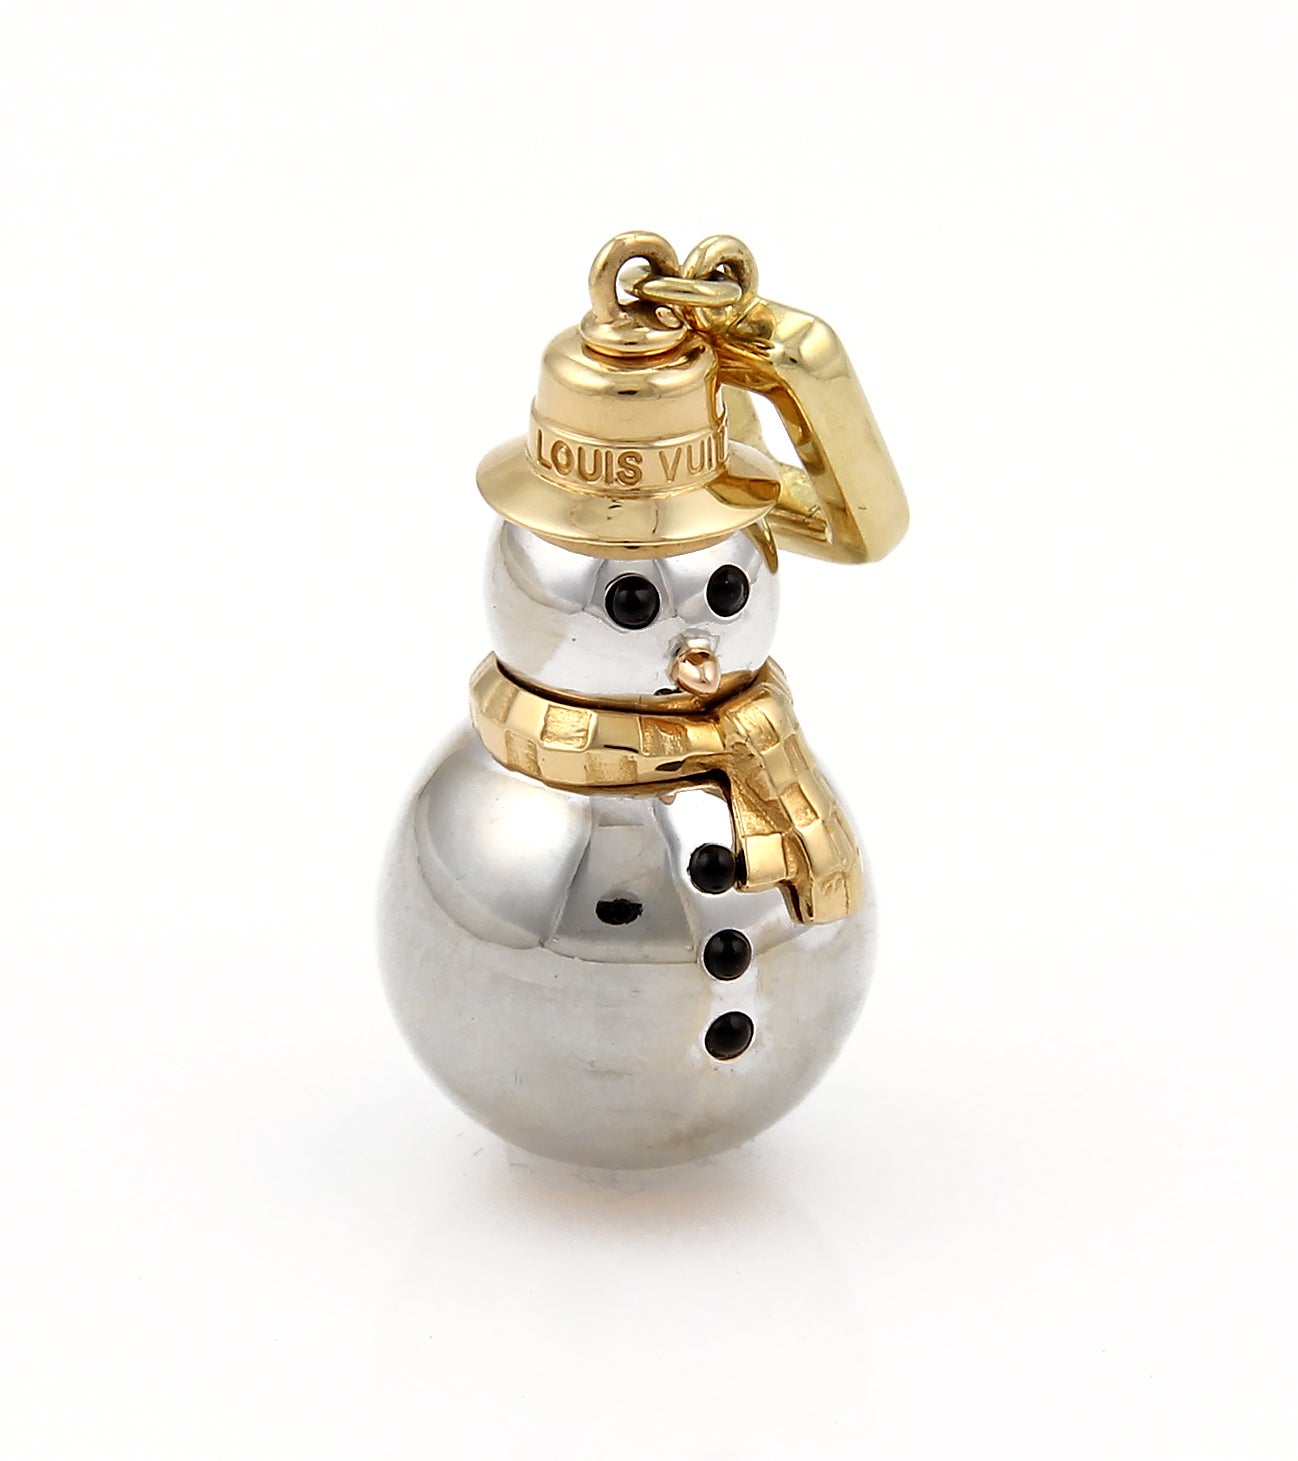 Louis Vuitton Collectable Snowman Onyx 18k Two Tone Gold Charm Pendant